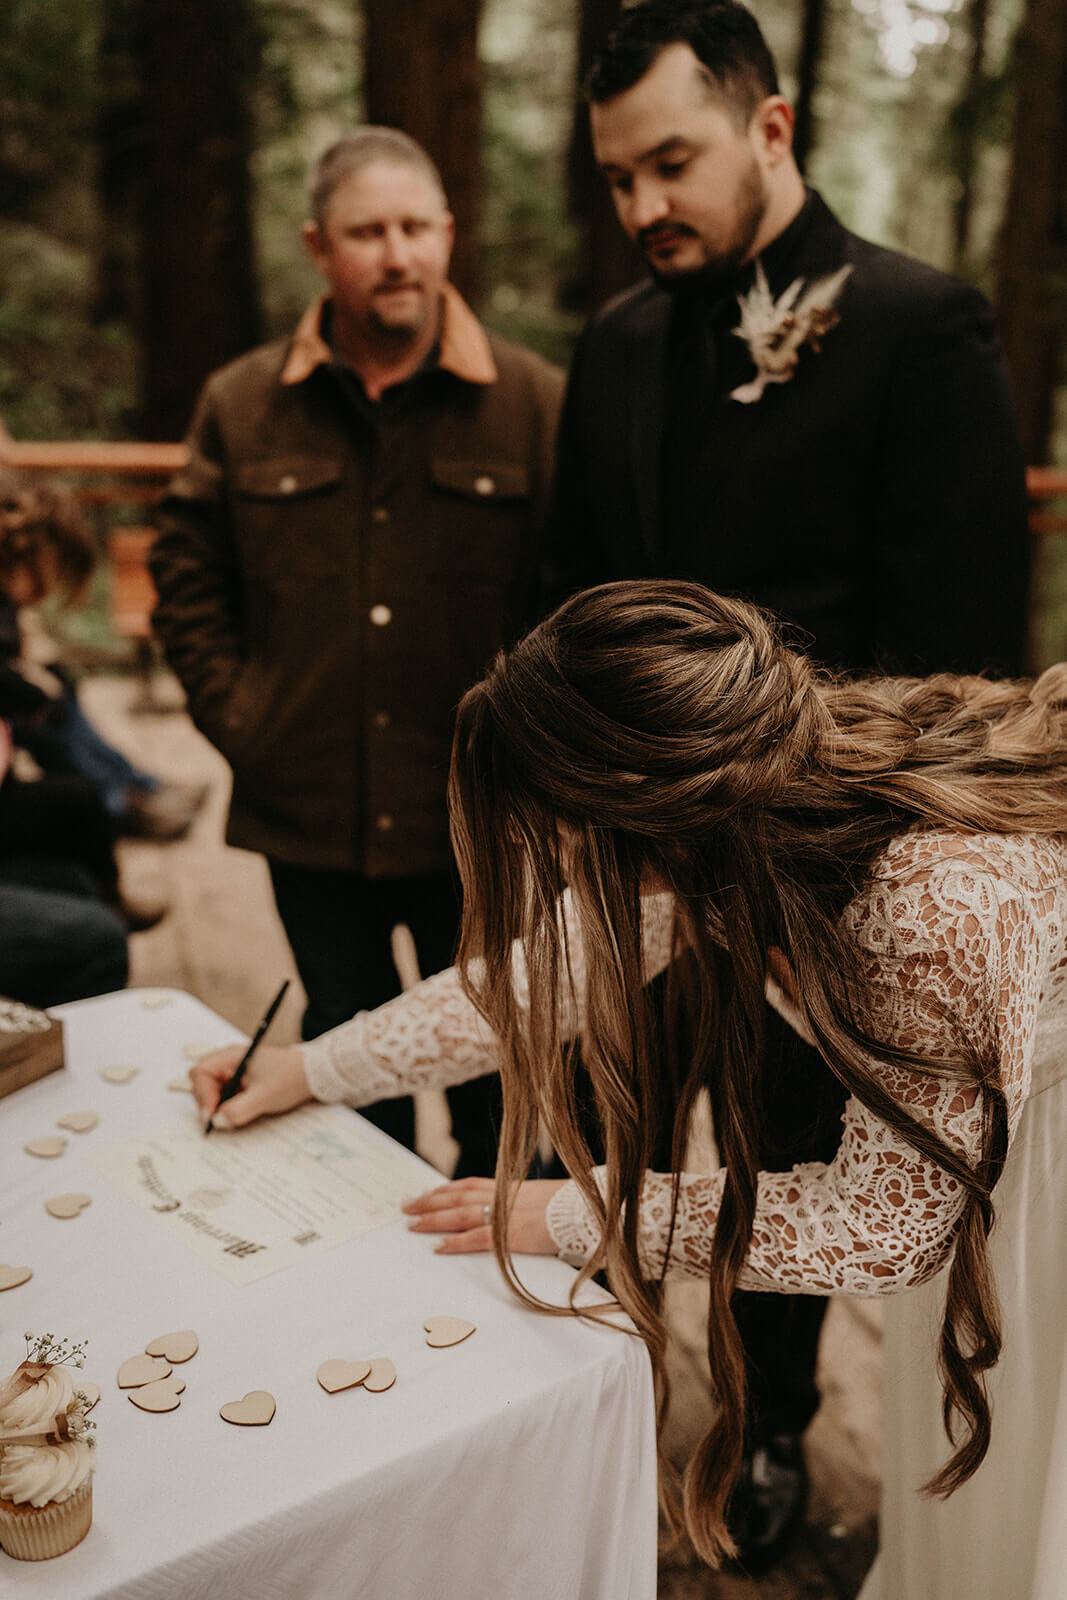 Bride signing marriage license at Oregon forest wedding